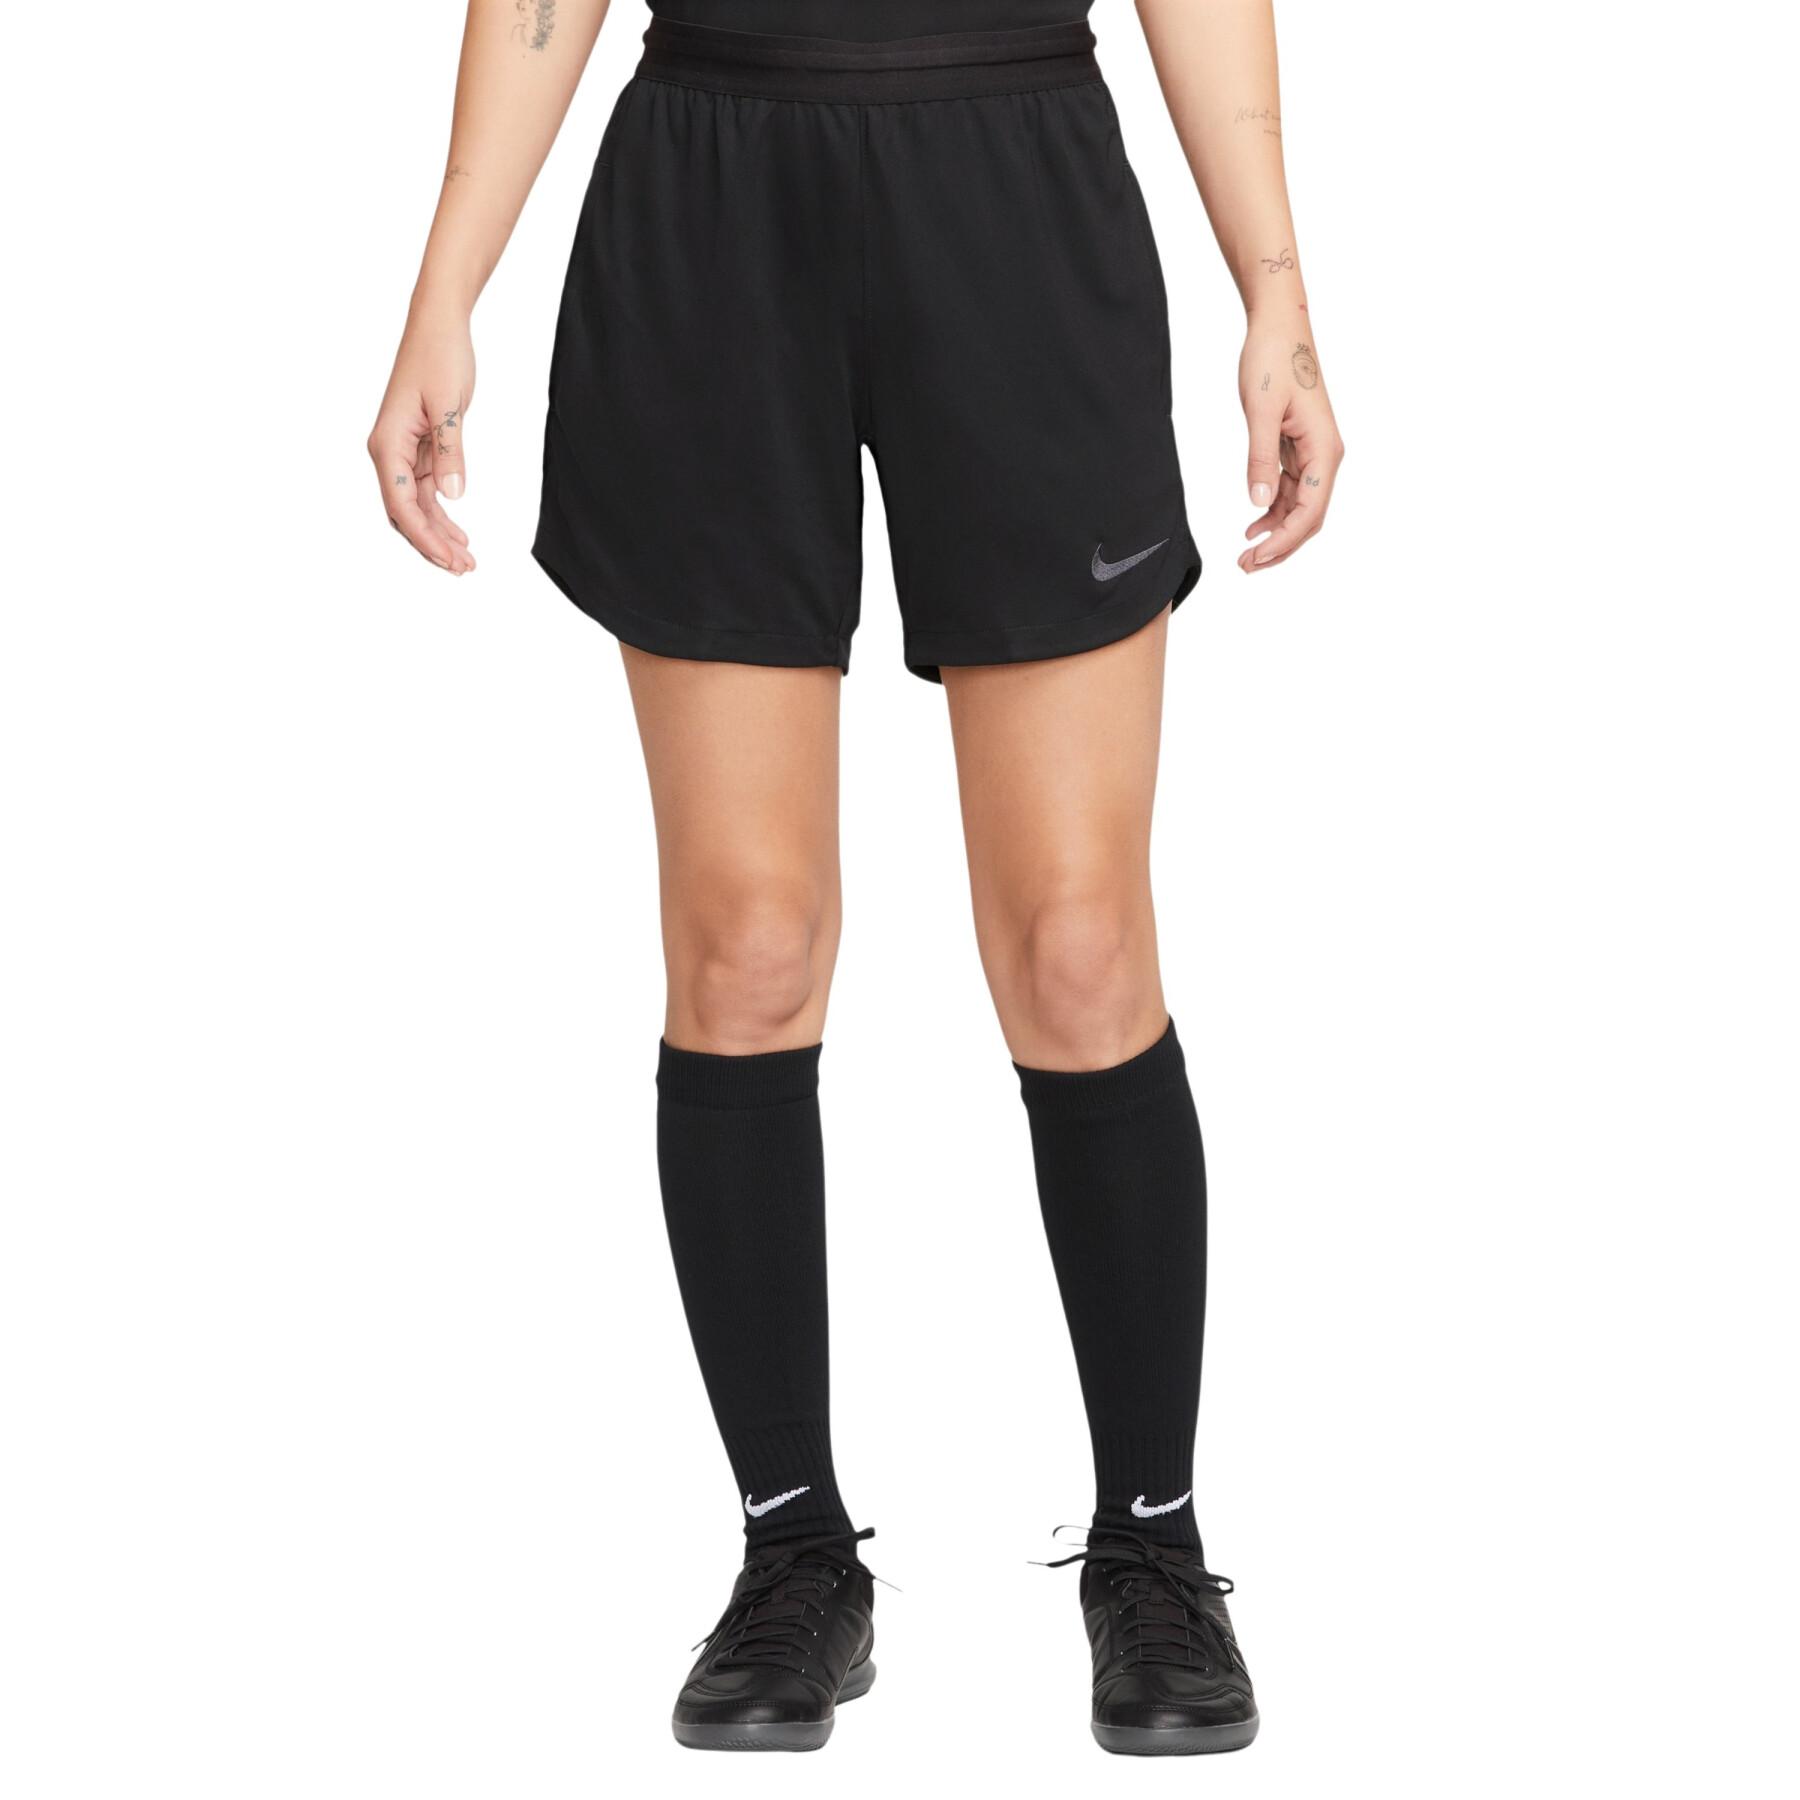 Women's shorts Nike Dri-FIT REF 2